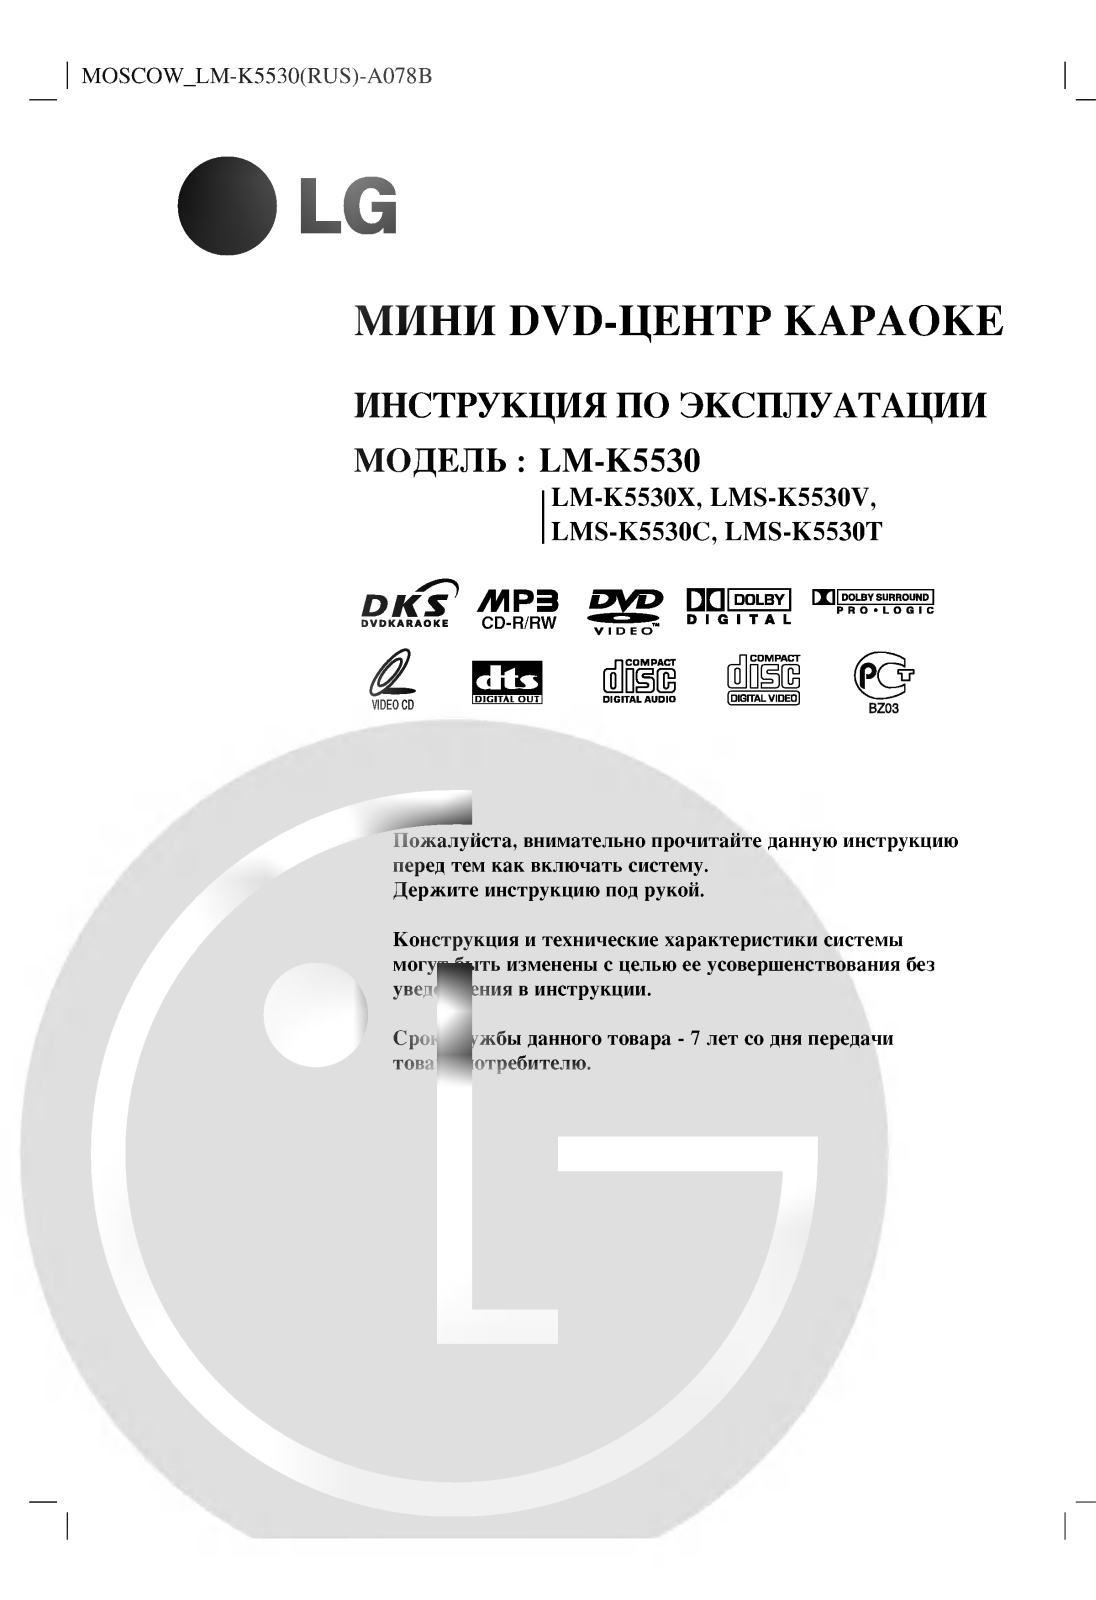 LG LM-K5530X User Manual